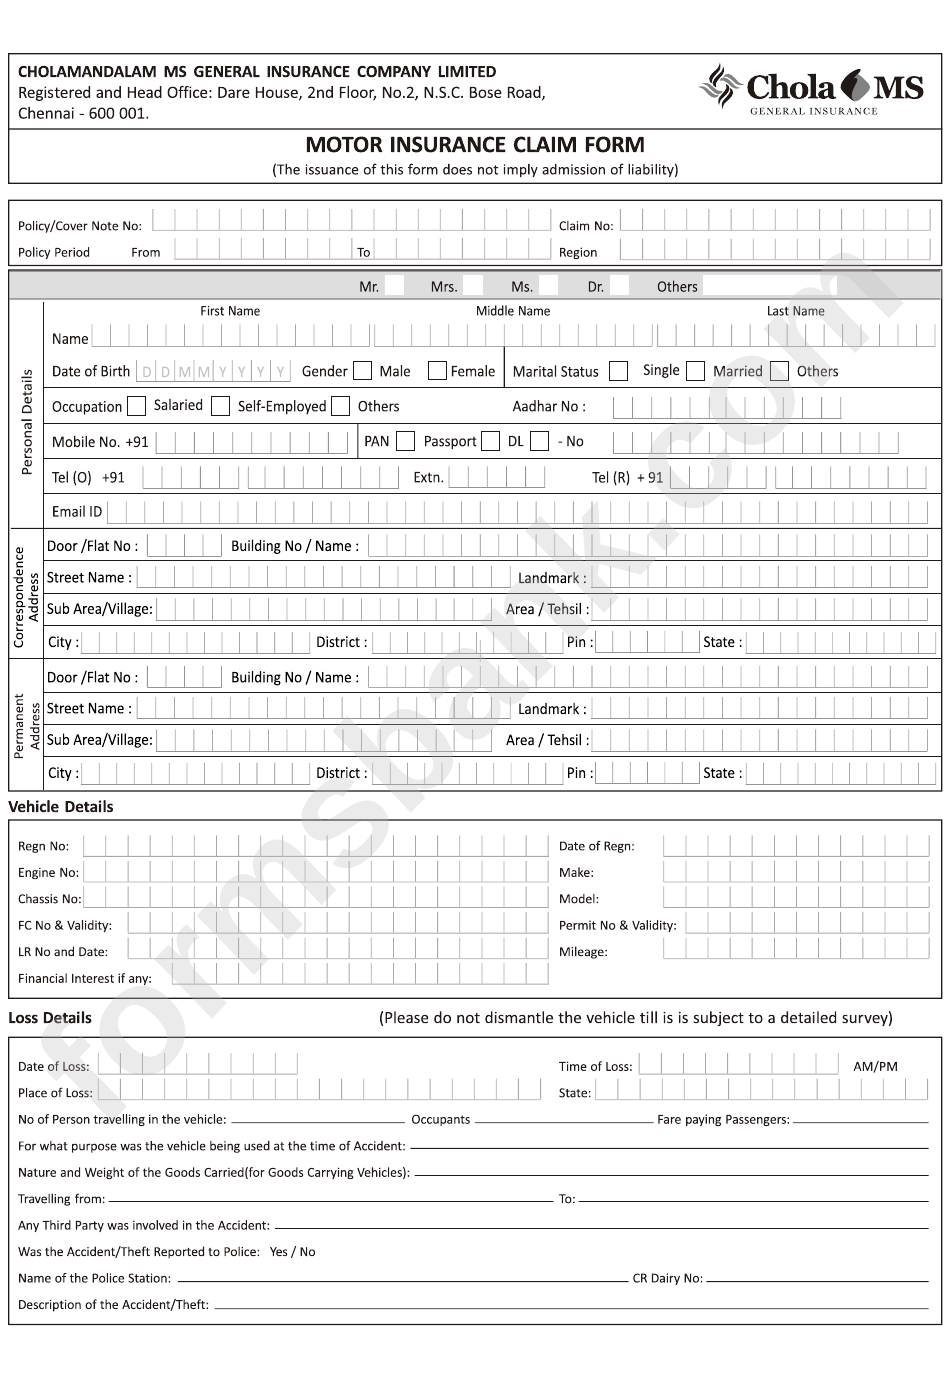 motor-insurance-claim-form-printable-pdf-download